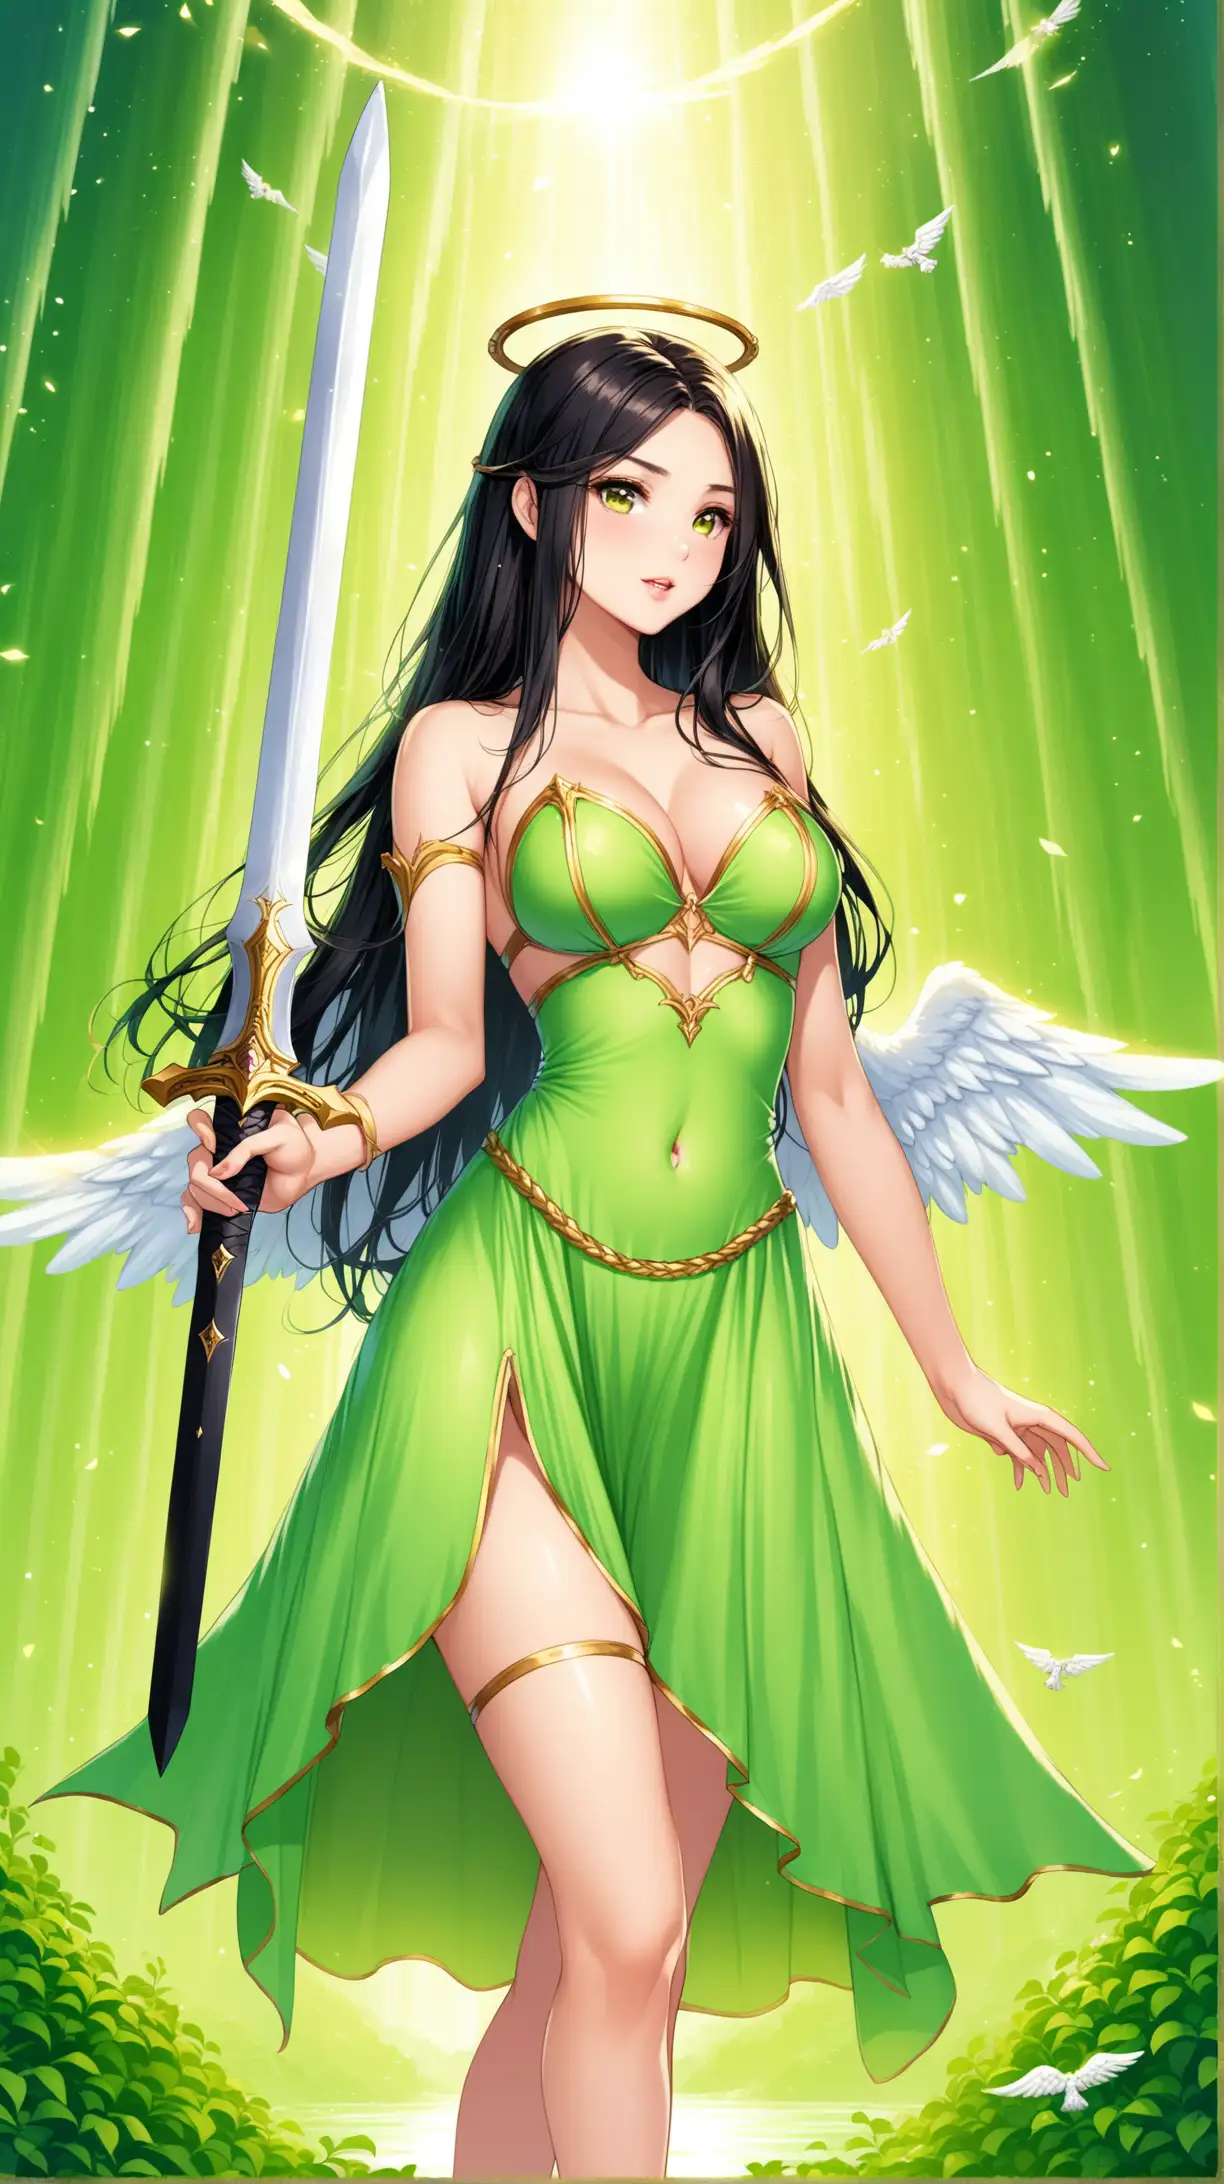 Sexy women carry sword , angel costume, playful, black long hair,light brown eye, light green short sexy dress, fantastic background .